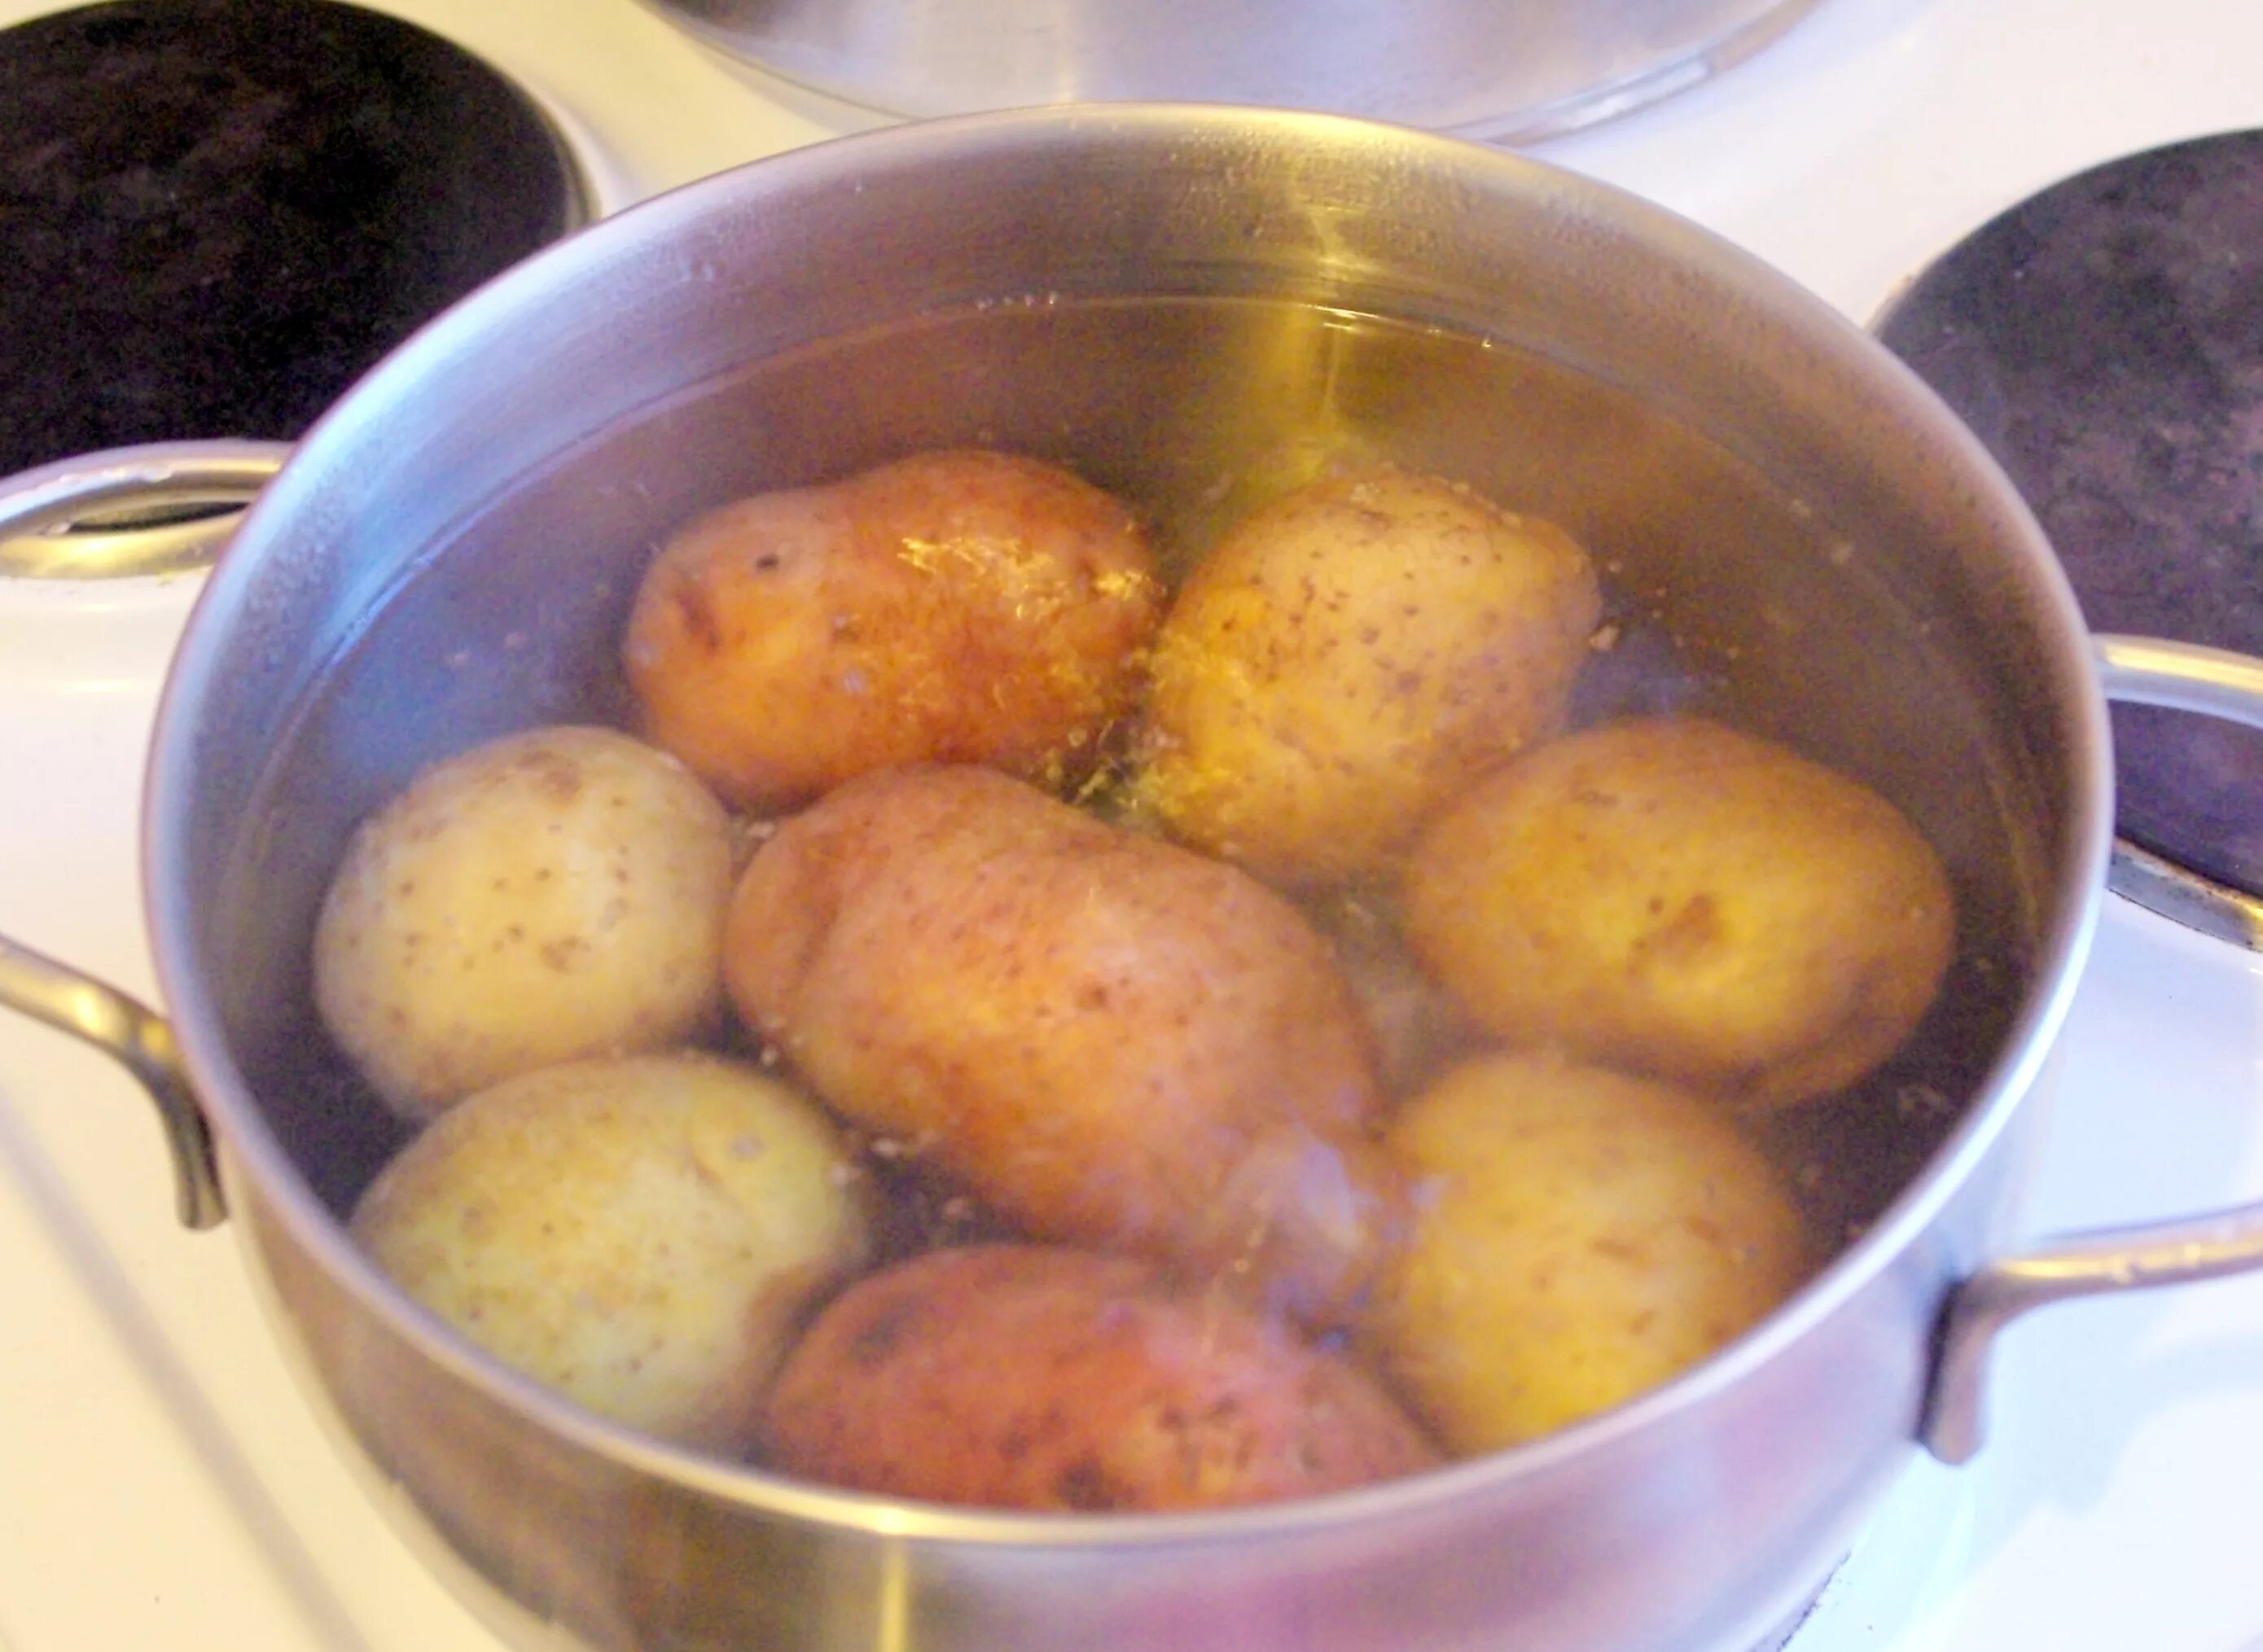 Картошка в кастрюле. Вареная картошка в кастрюле. Картошка в мундире в кастрюле. Вареный картофель в кастрюле.